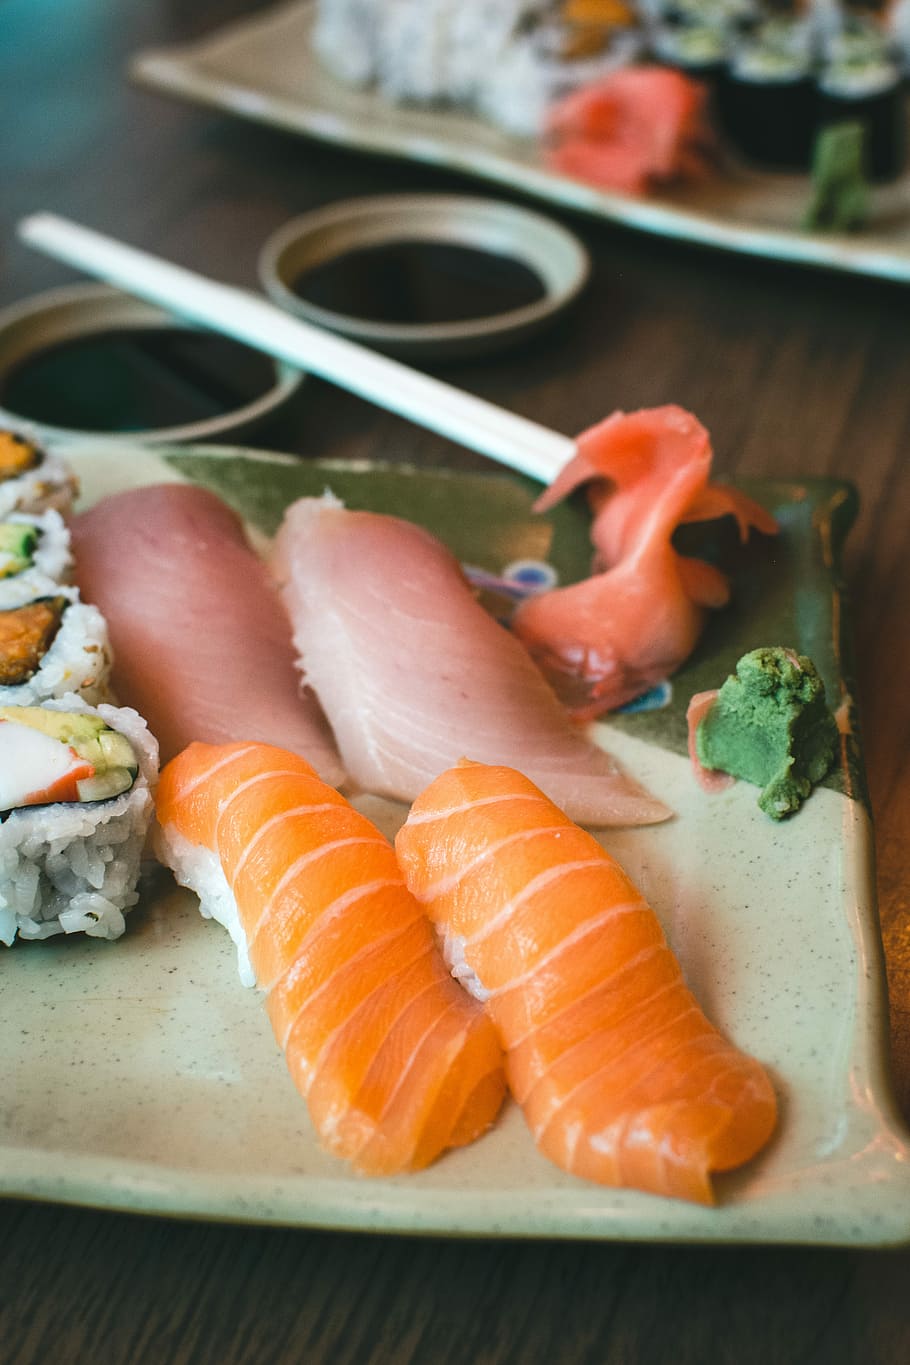 sushi yam california rolls, Sushi, yam california, rolls, eating out, hands, restaurant, seafood, food, salmon